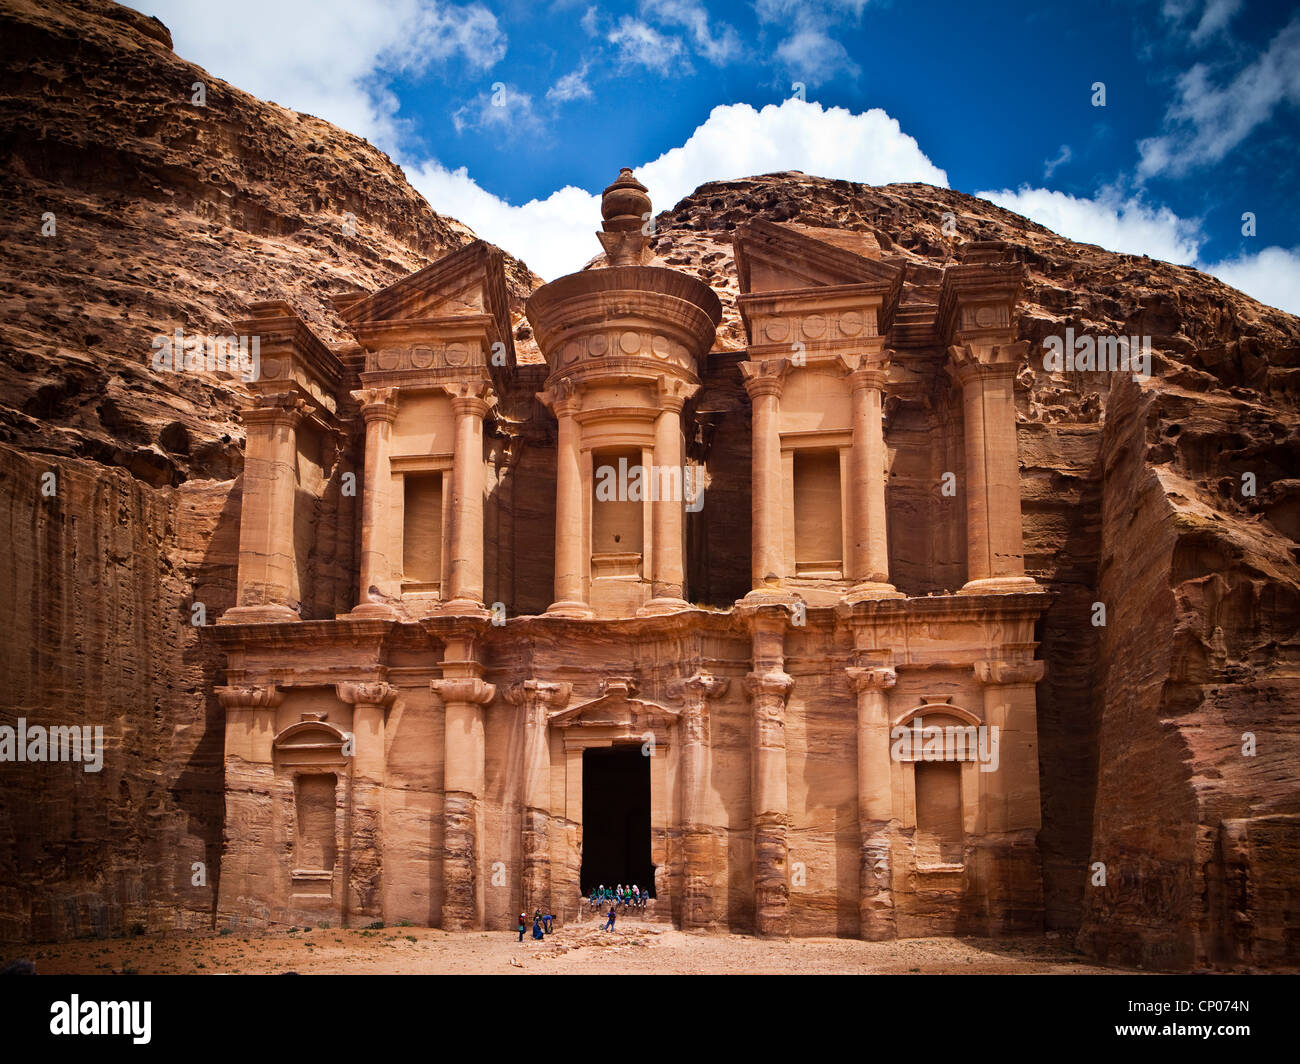 The Monastery (Al-Deir), Petra, Jordan, Western Asia Stock Photo - Alamy